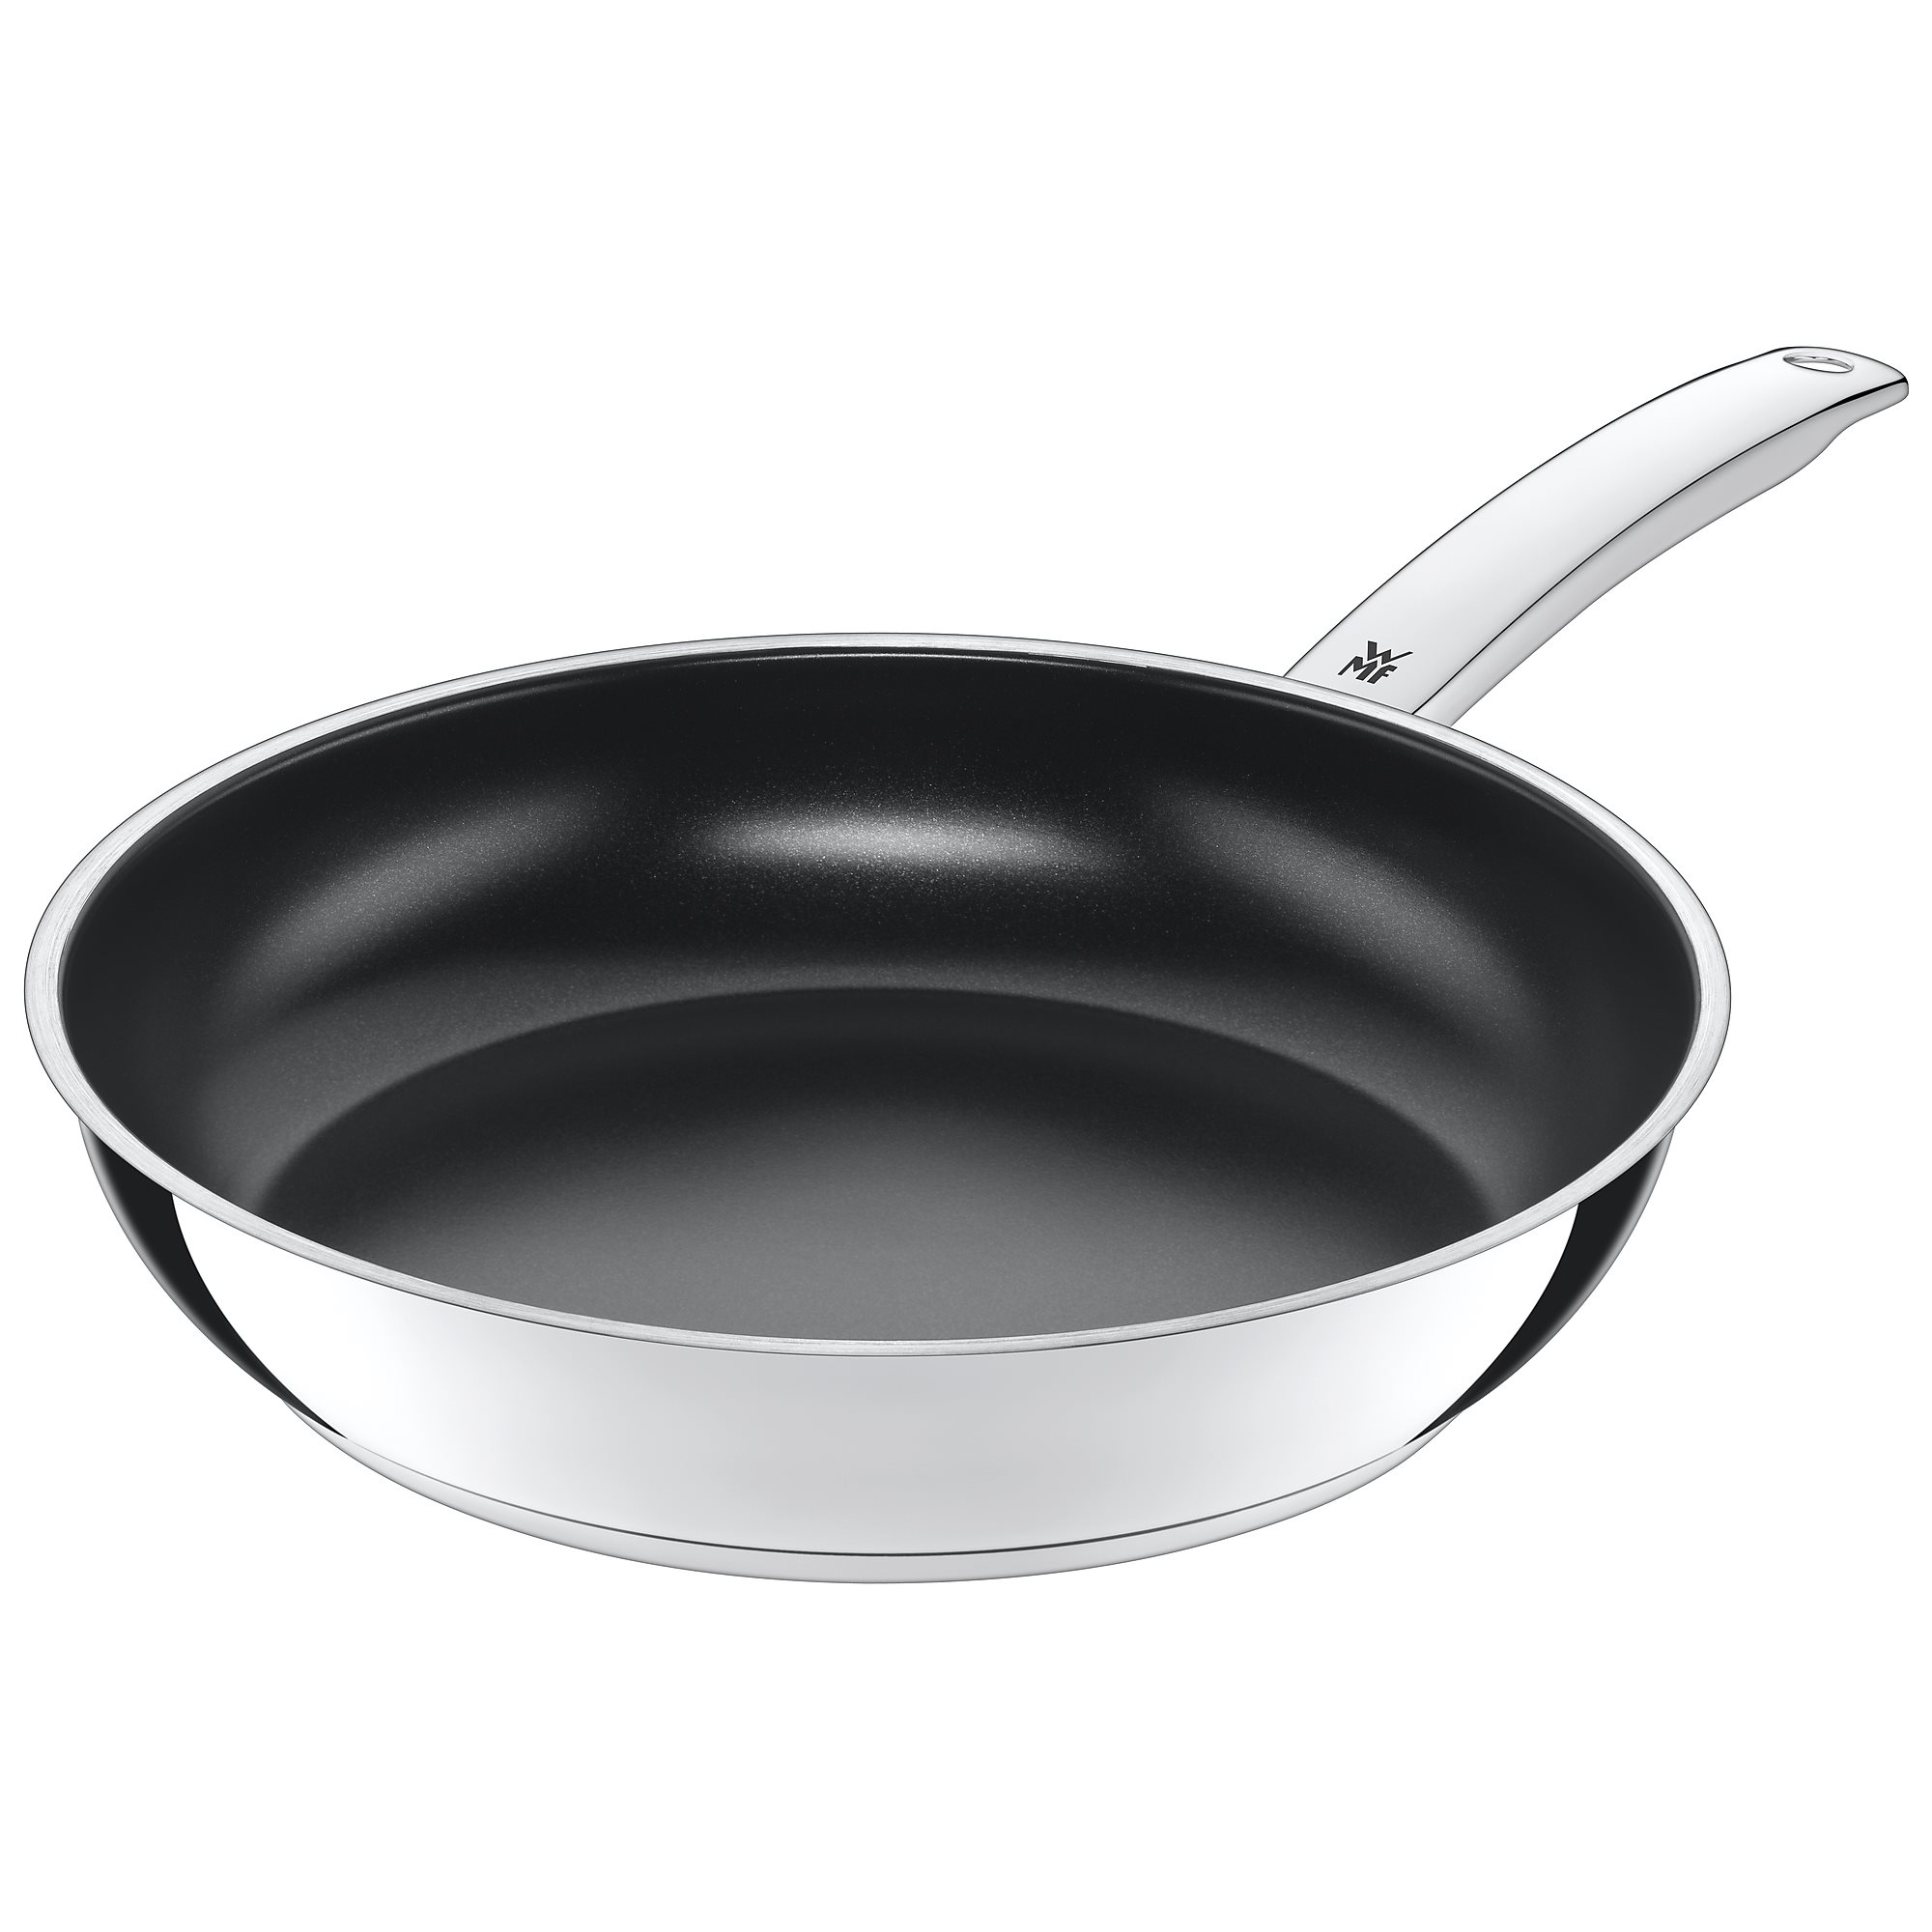 WMF DURADO frying pan with ceramic coating 28 cm INDUCTION Frying pans  Frying COOKING  BAKING 1a-Neuware Englisch